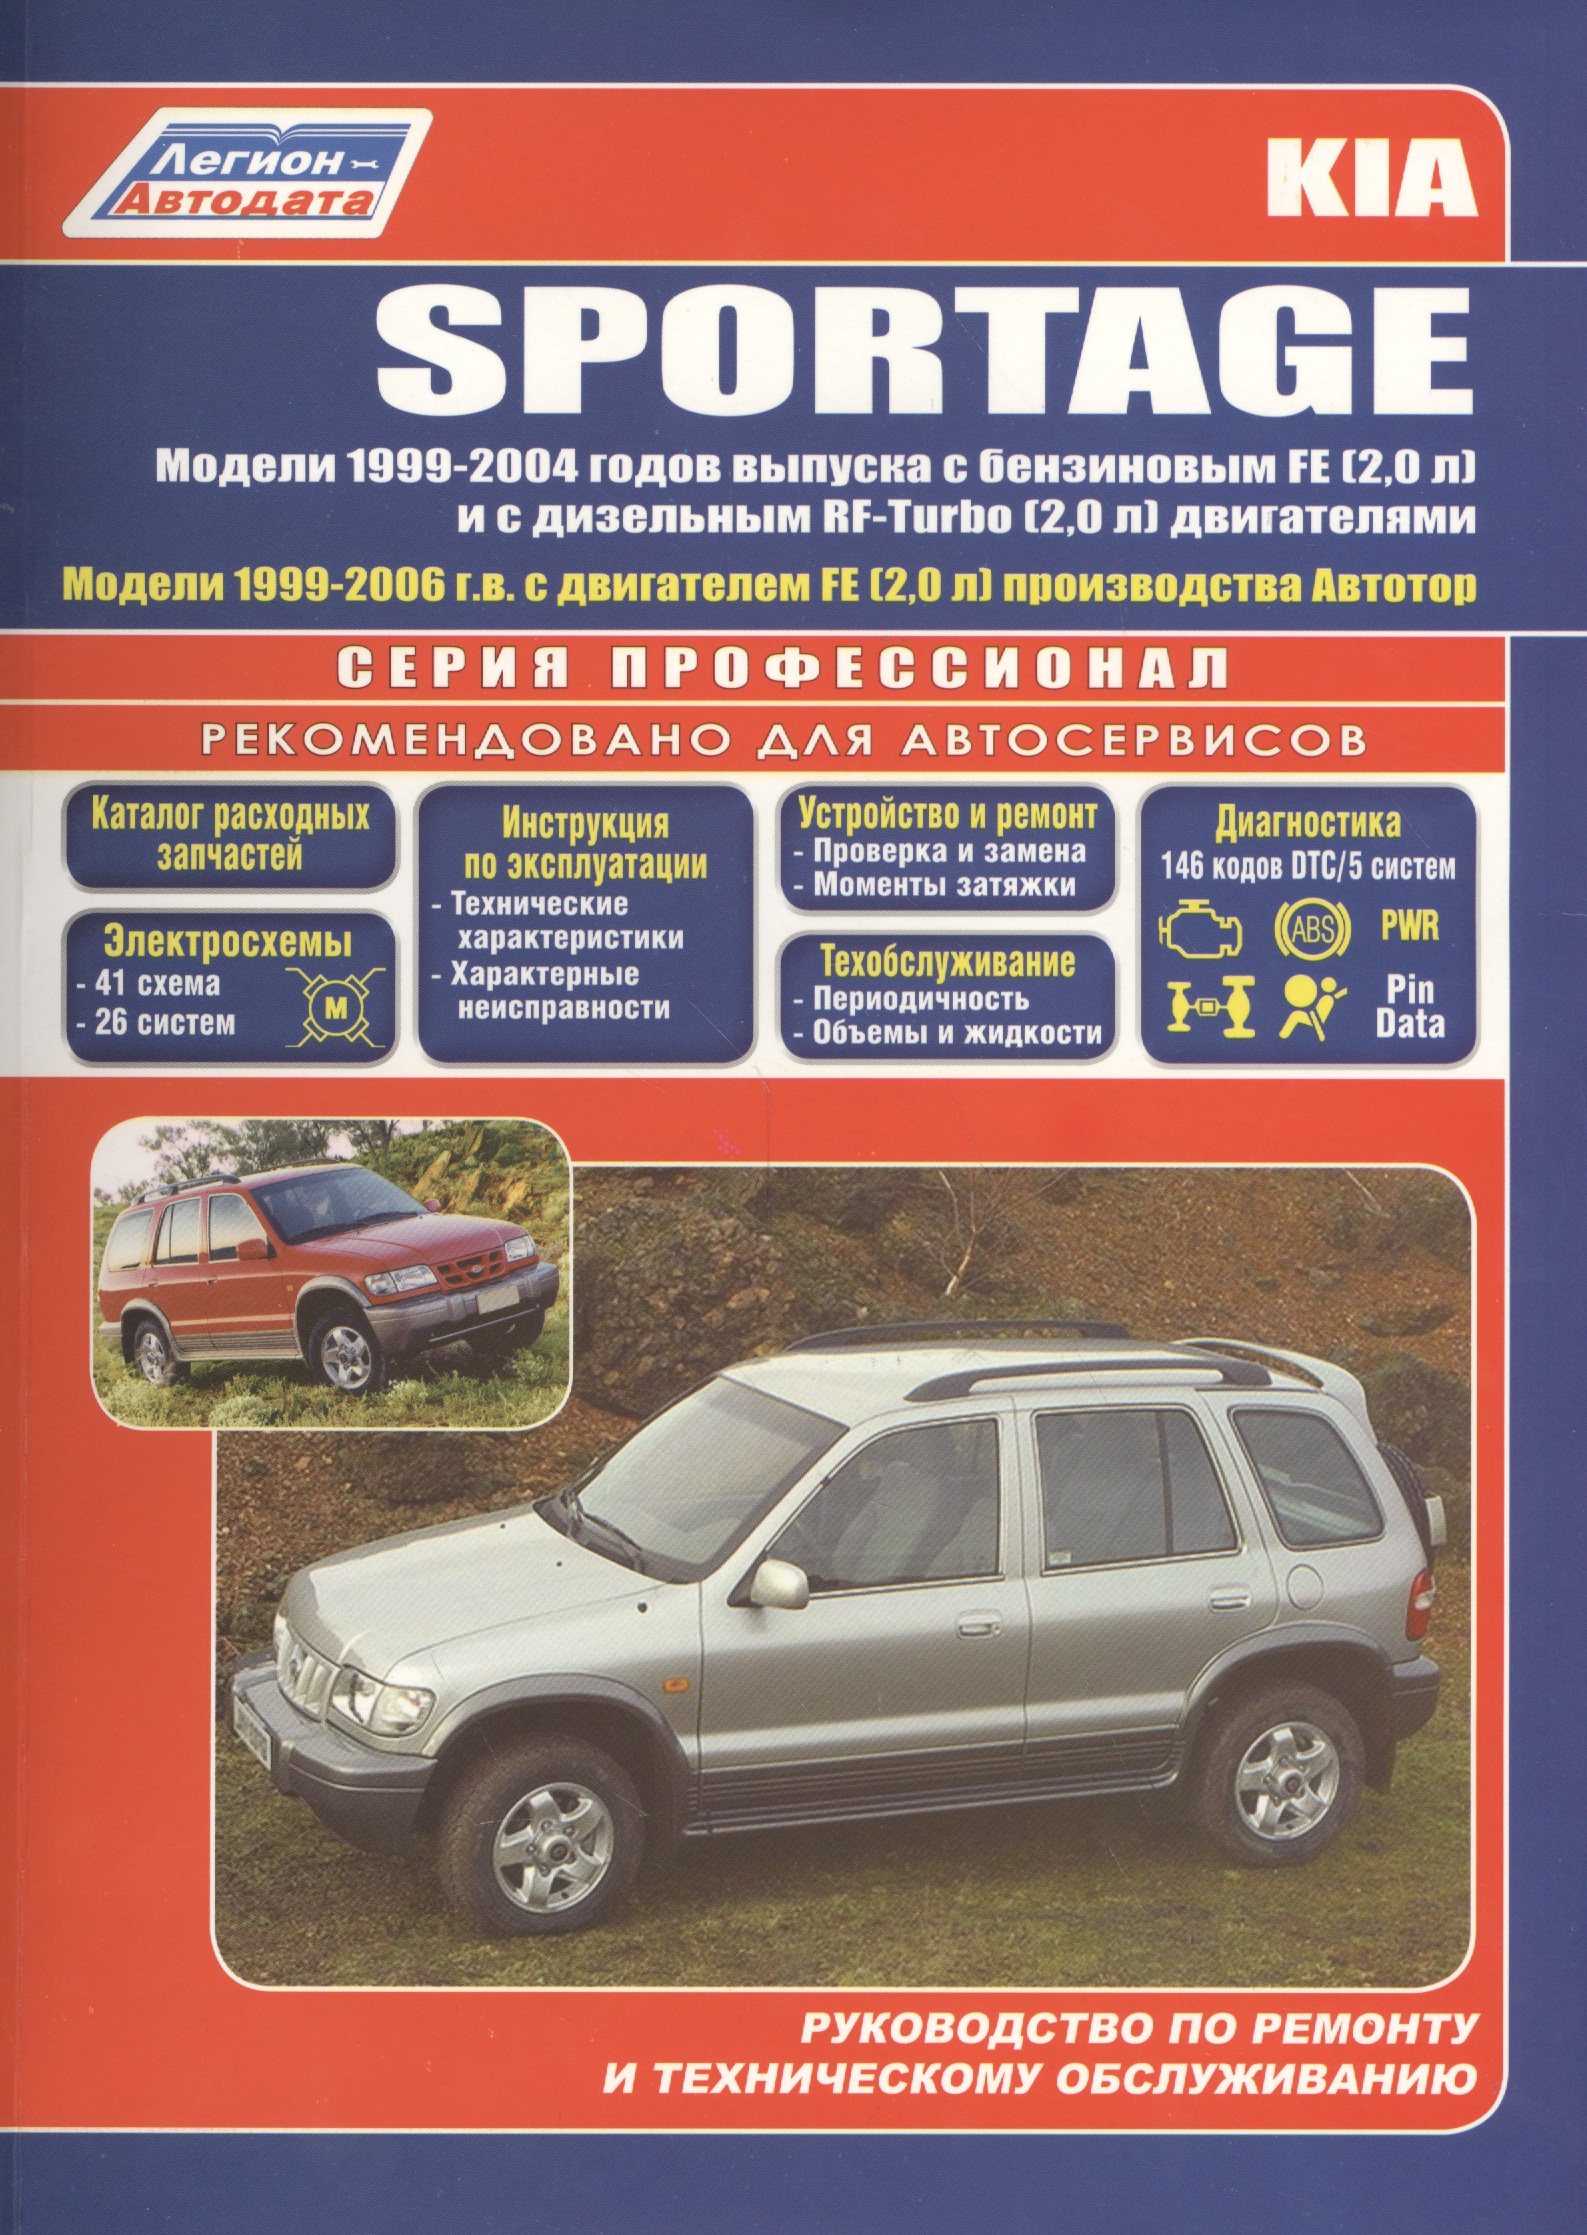 Kia Sportage Модели 2WD&4WD 1999-2004 г вып. с бенз. FE (2,0)…(мПрофессионал) цена и фото